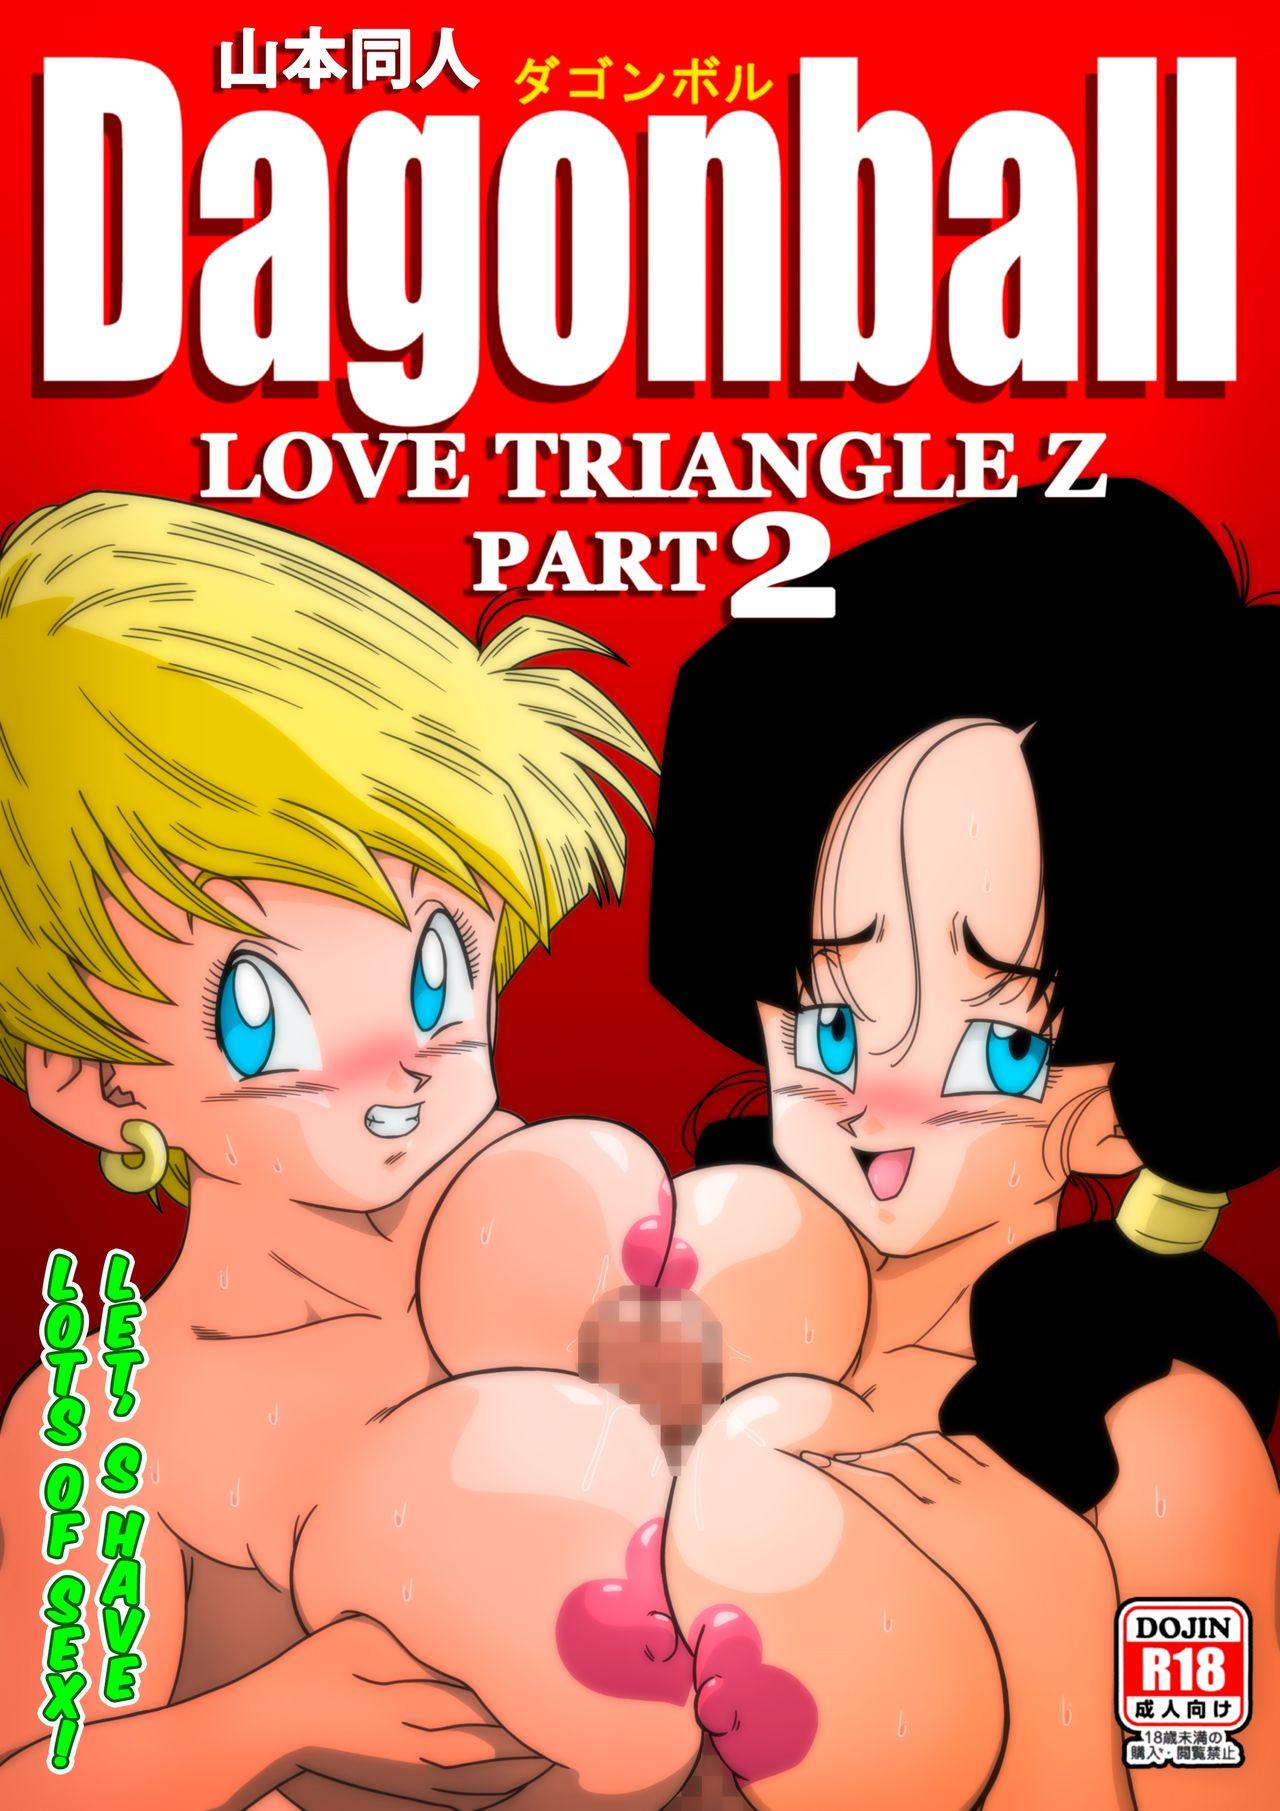 Parody LOVE TRIANGLE Z Part 2 - Dragon ball z Softcore - Picture 1